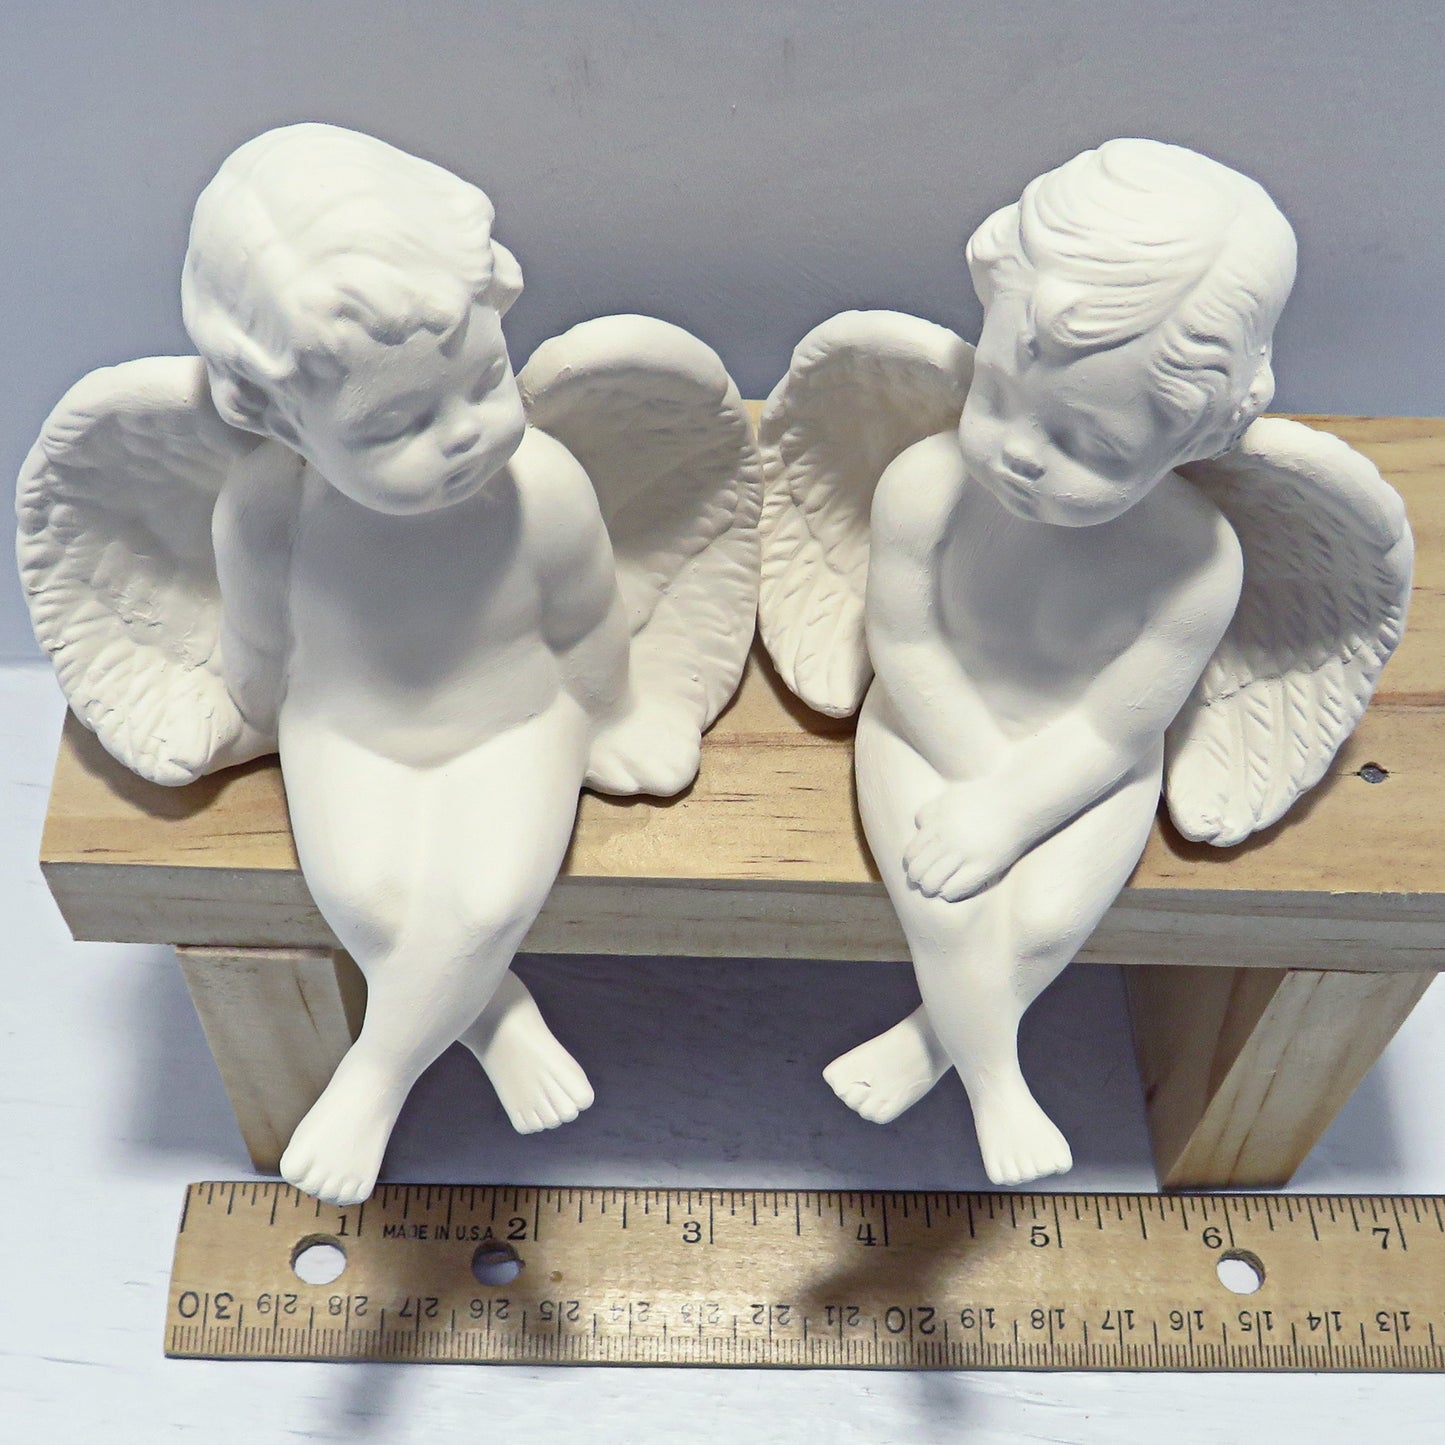 Handmade Ready to Paint Ceramic Bisque Cherub Figurines, Sitting Cherub Statues with Heads Turned, Angel Decor, Angel Gift, Cherub Decor